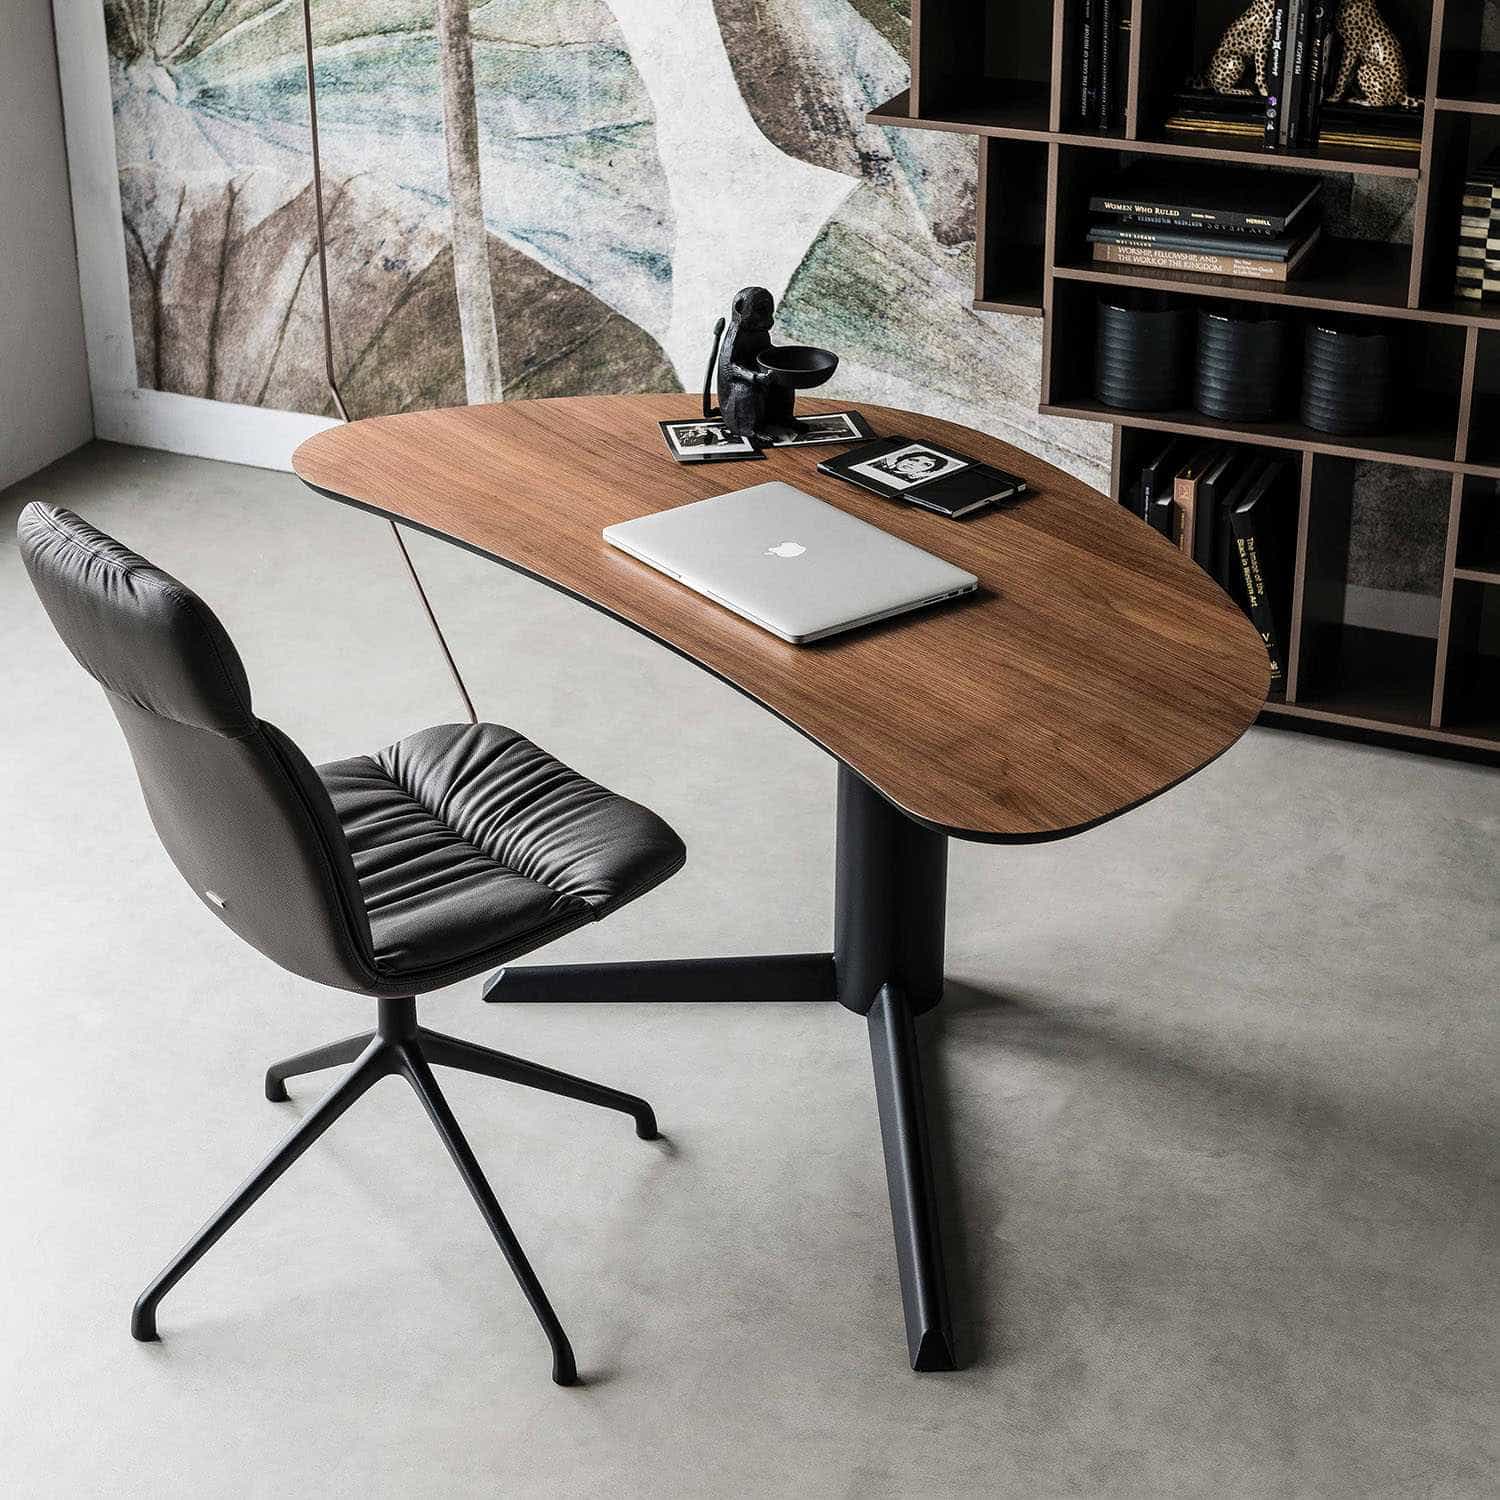 Furniture Design Ideas for Study Table Desk